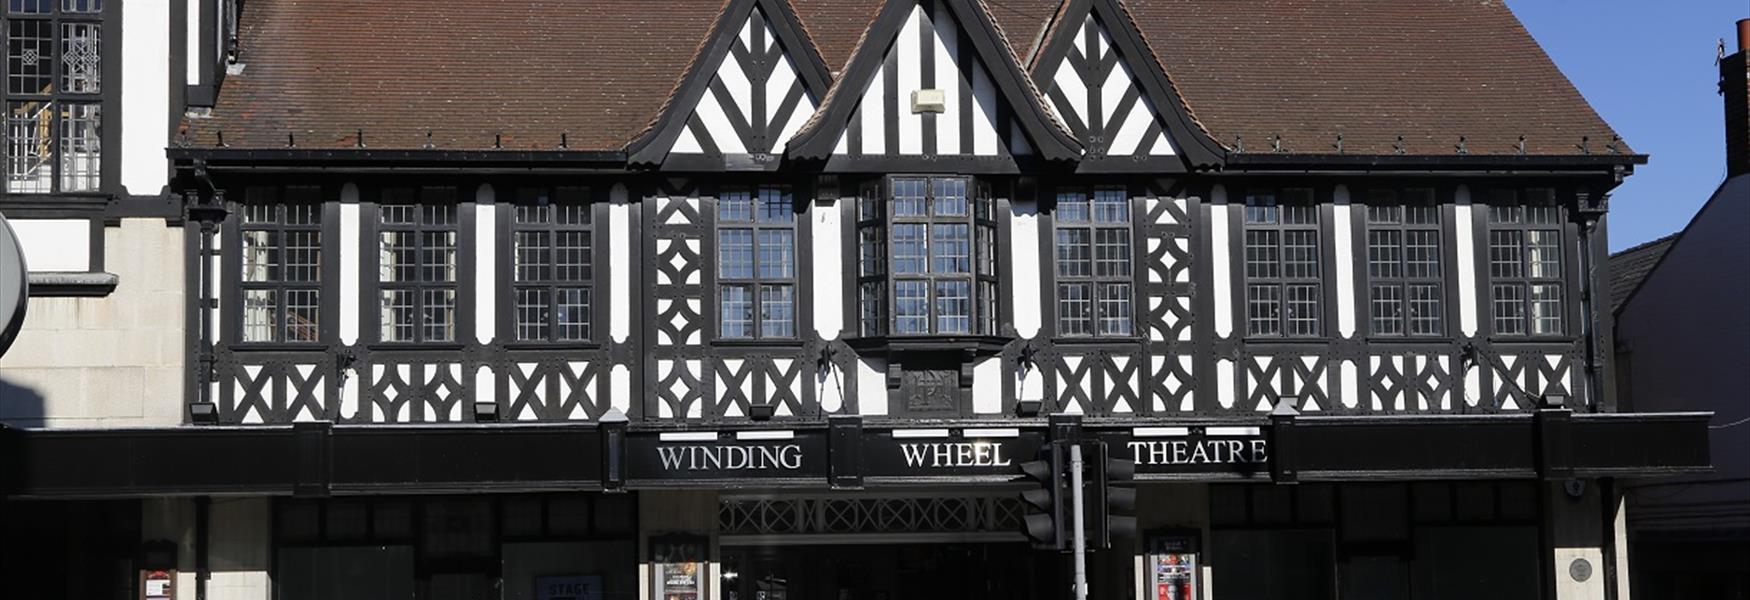 Winding Wheel Theatre, Chesterfield